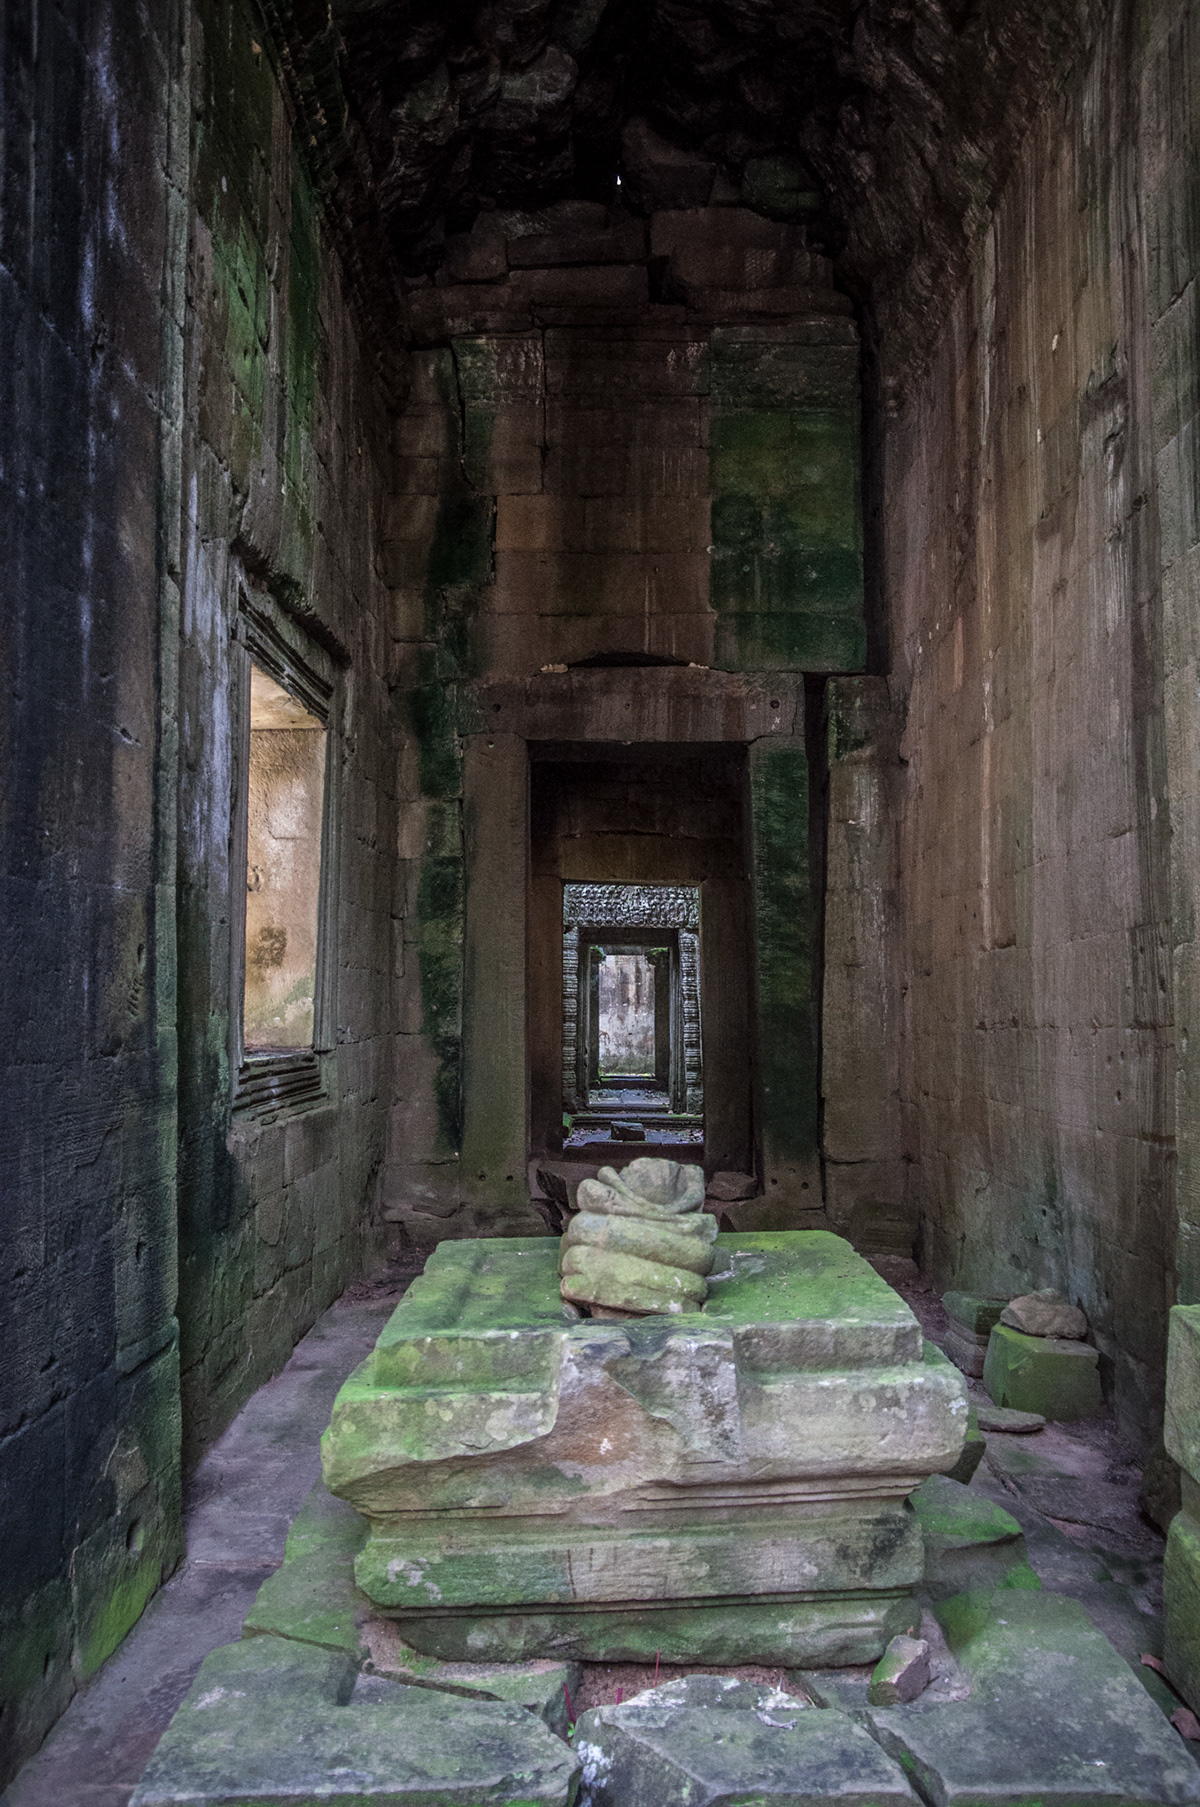 Cambodia temples angkor Wat asia Travel